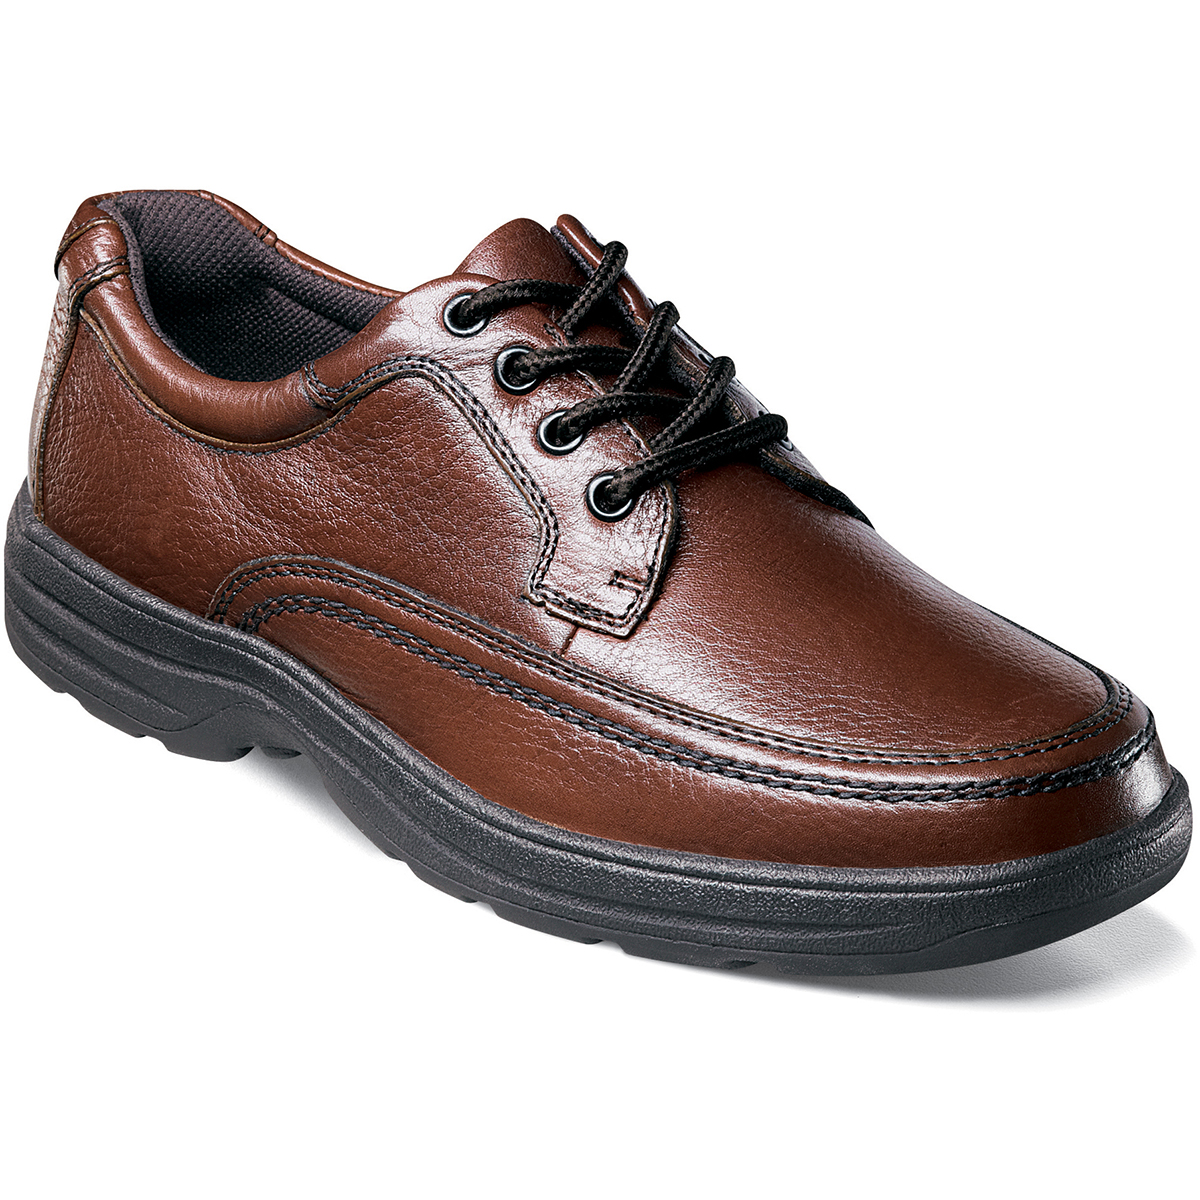 Men's Casual Shoes | Cognac Moc Toe Oxford | Nunn Bush Colton